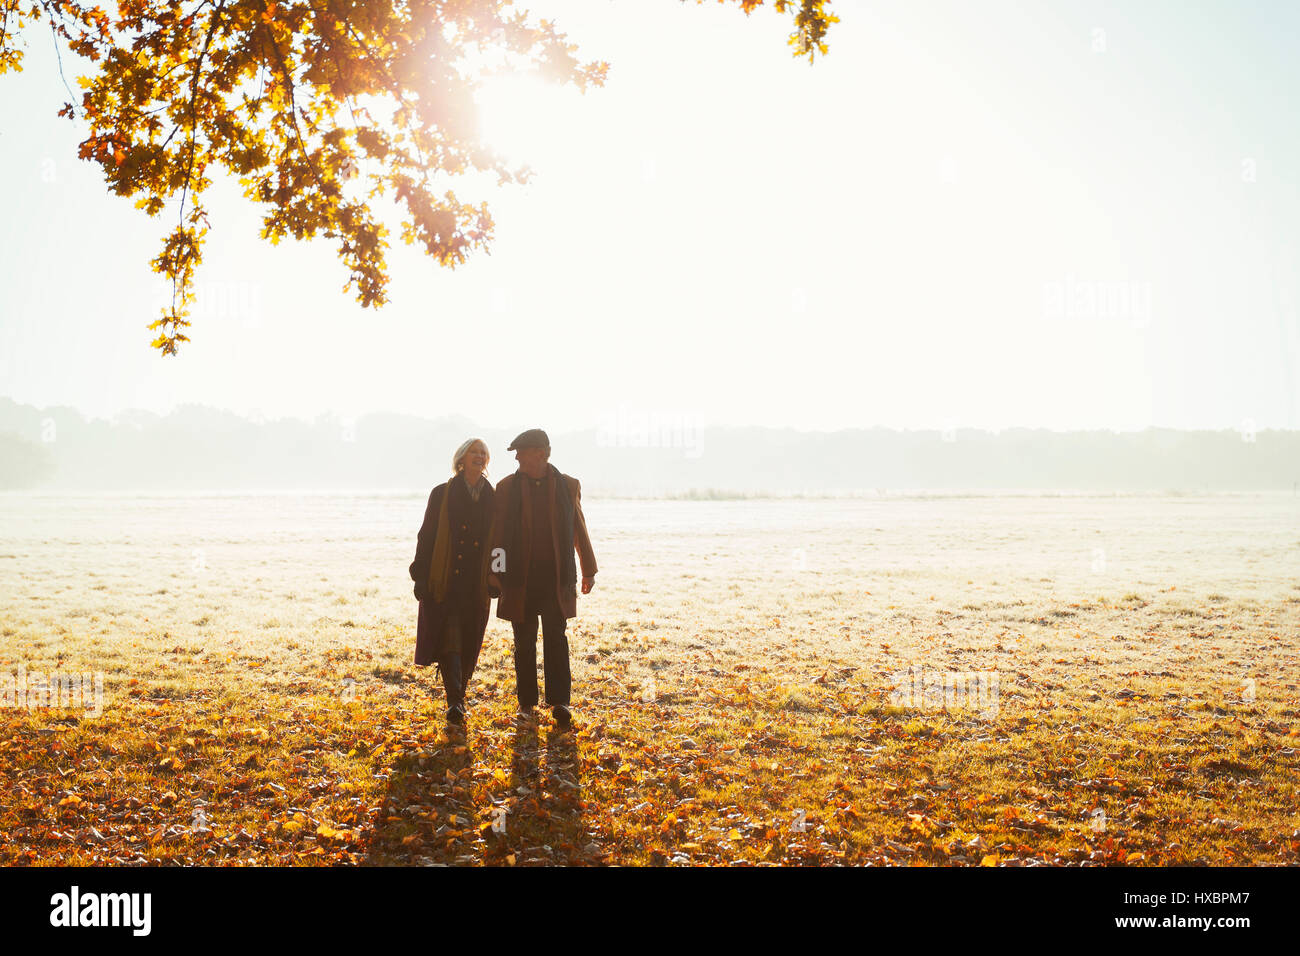 Silhouette älteres paar Hand in Hand Wandern im sonnigen Herbst park Stockfoto